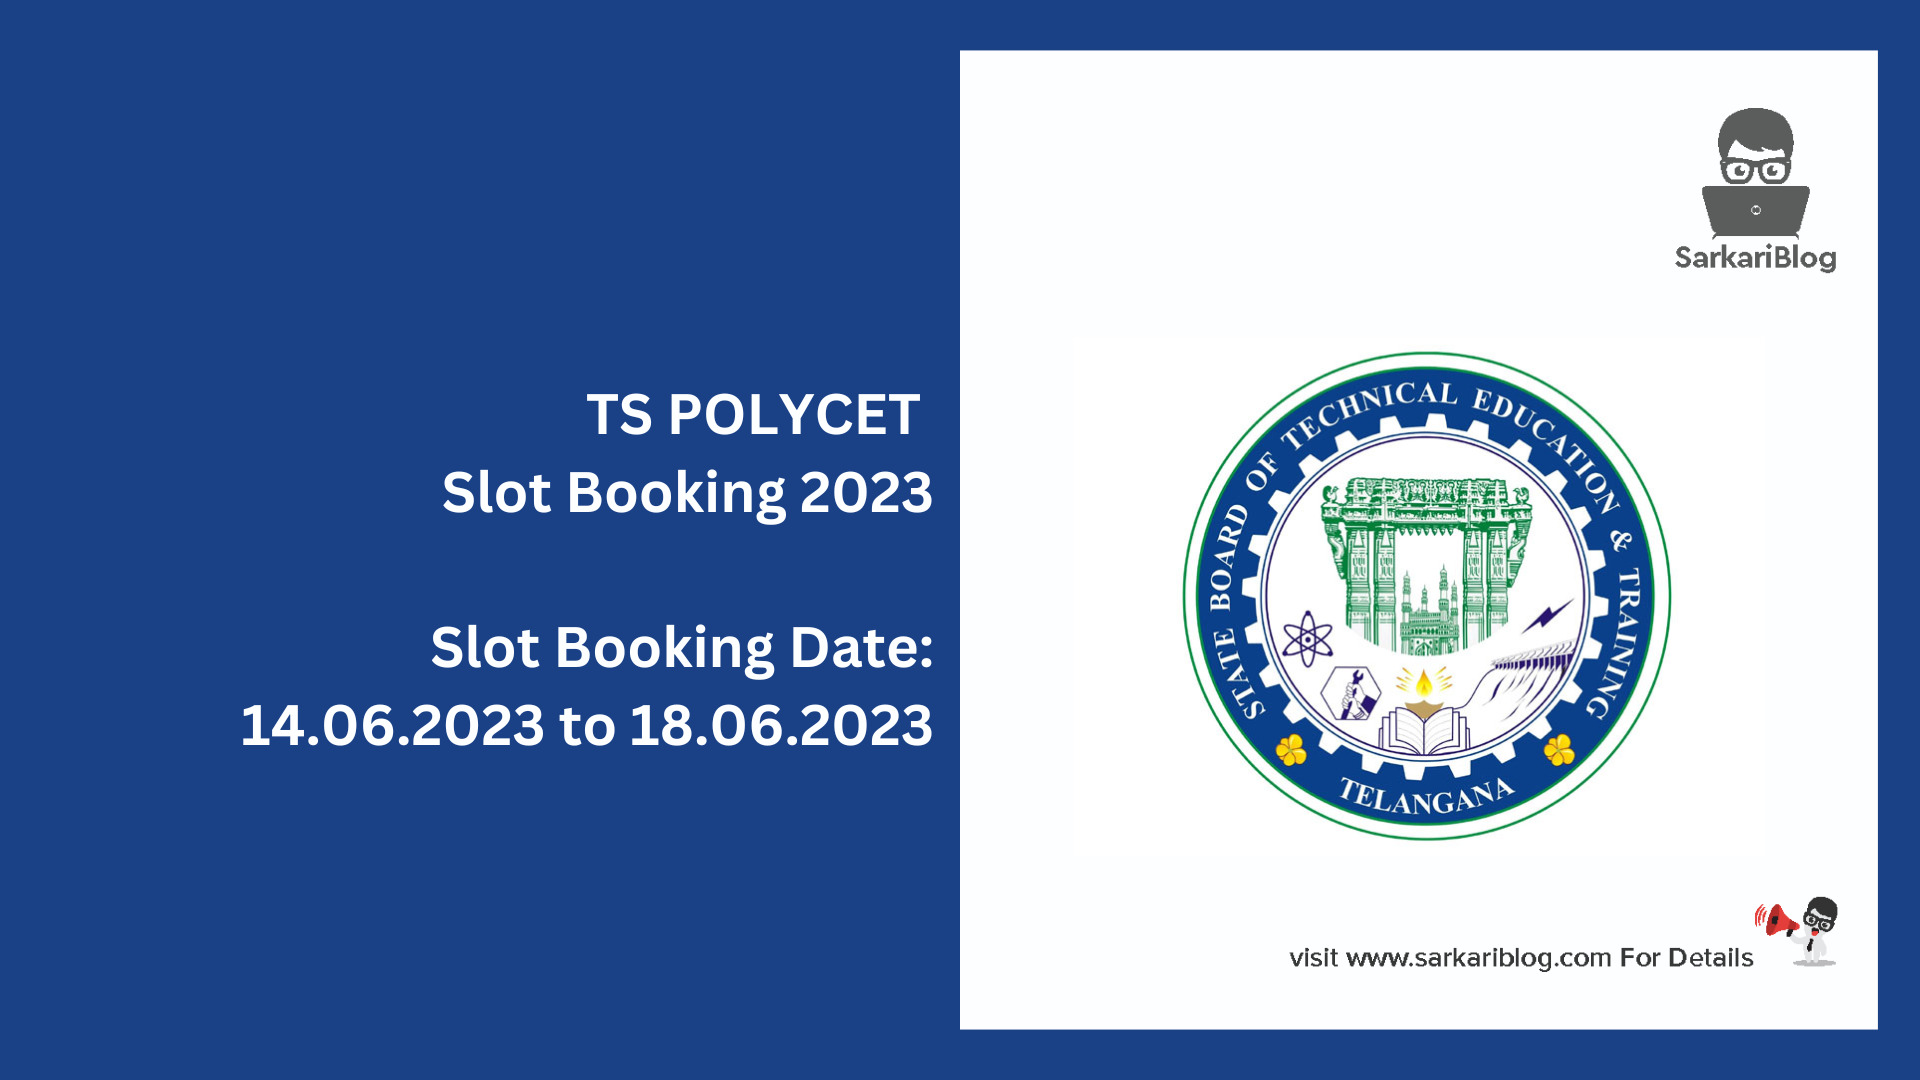 TS POLYCET Slot Booking 2023